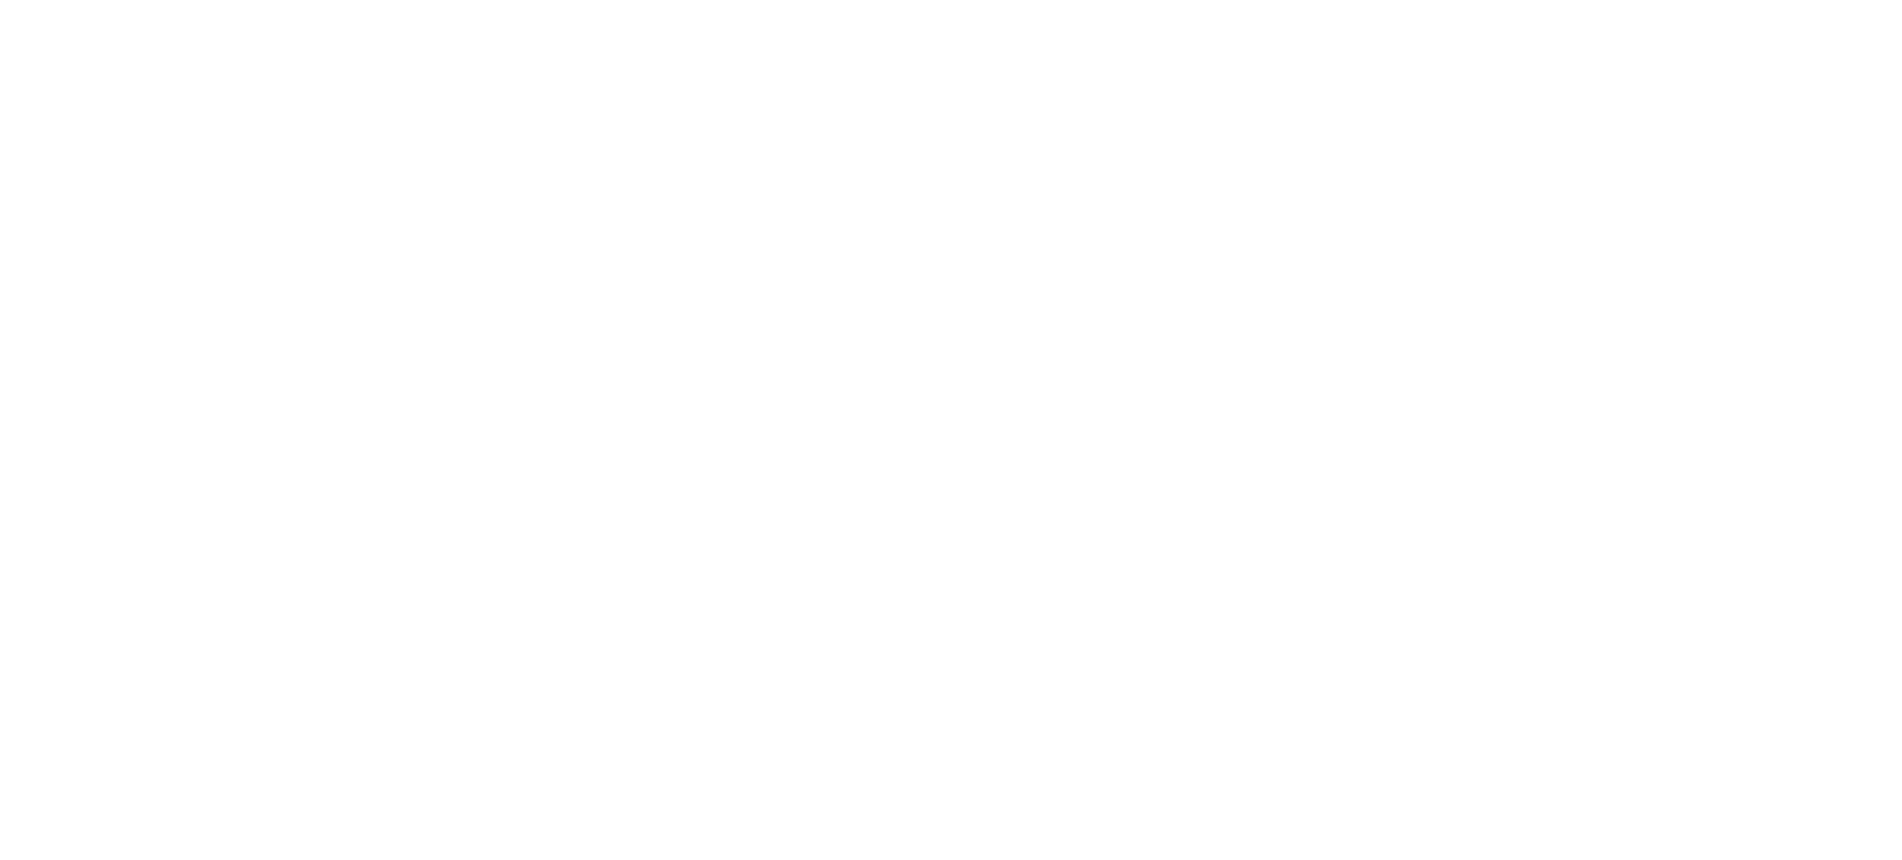 Cheaper by the Dozen 2 logo